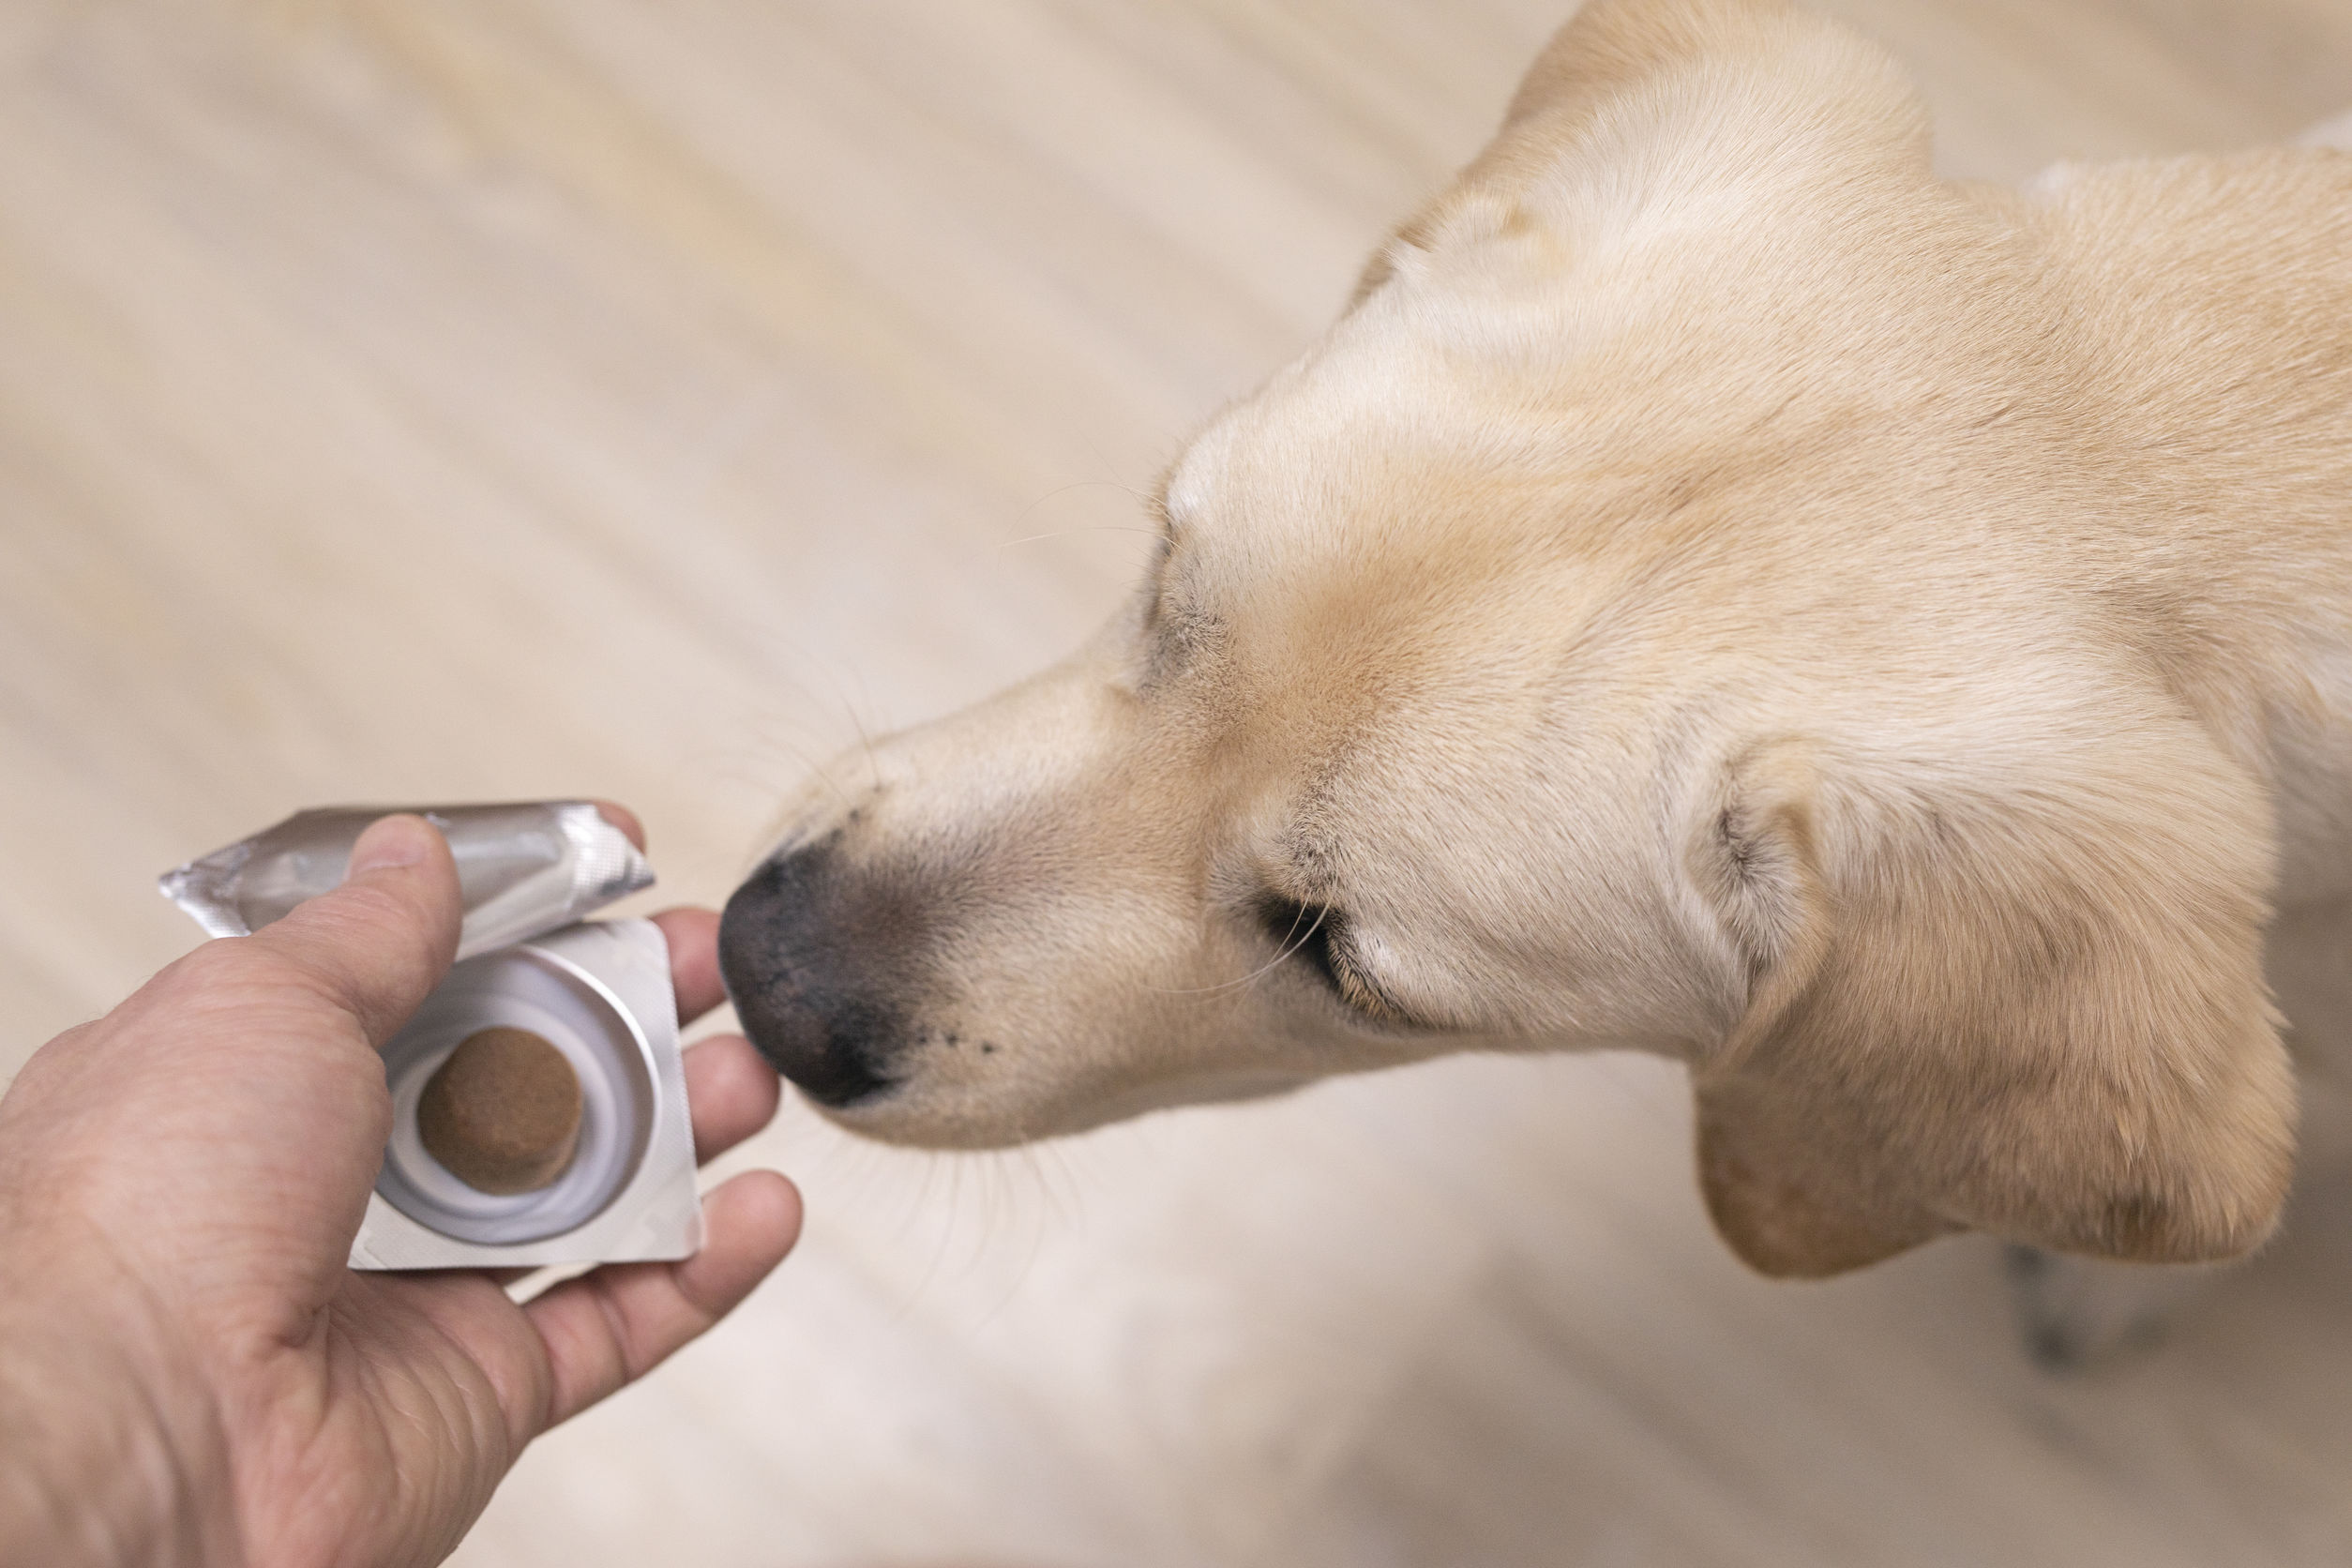 Dog receiving flea and tick prevention